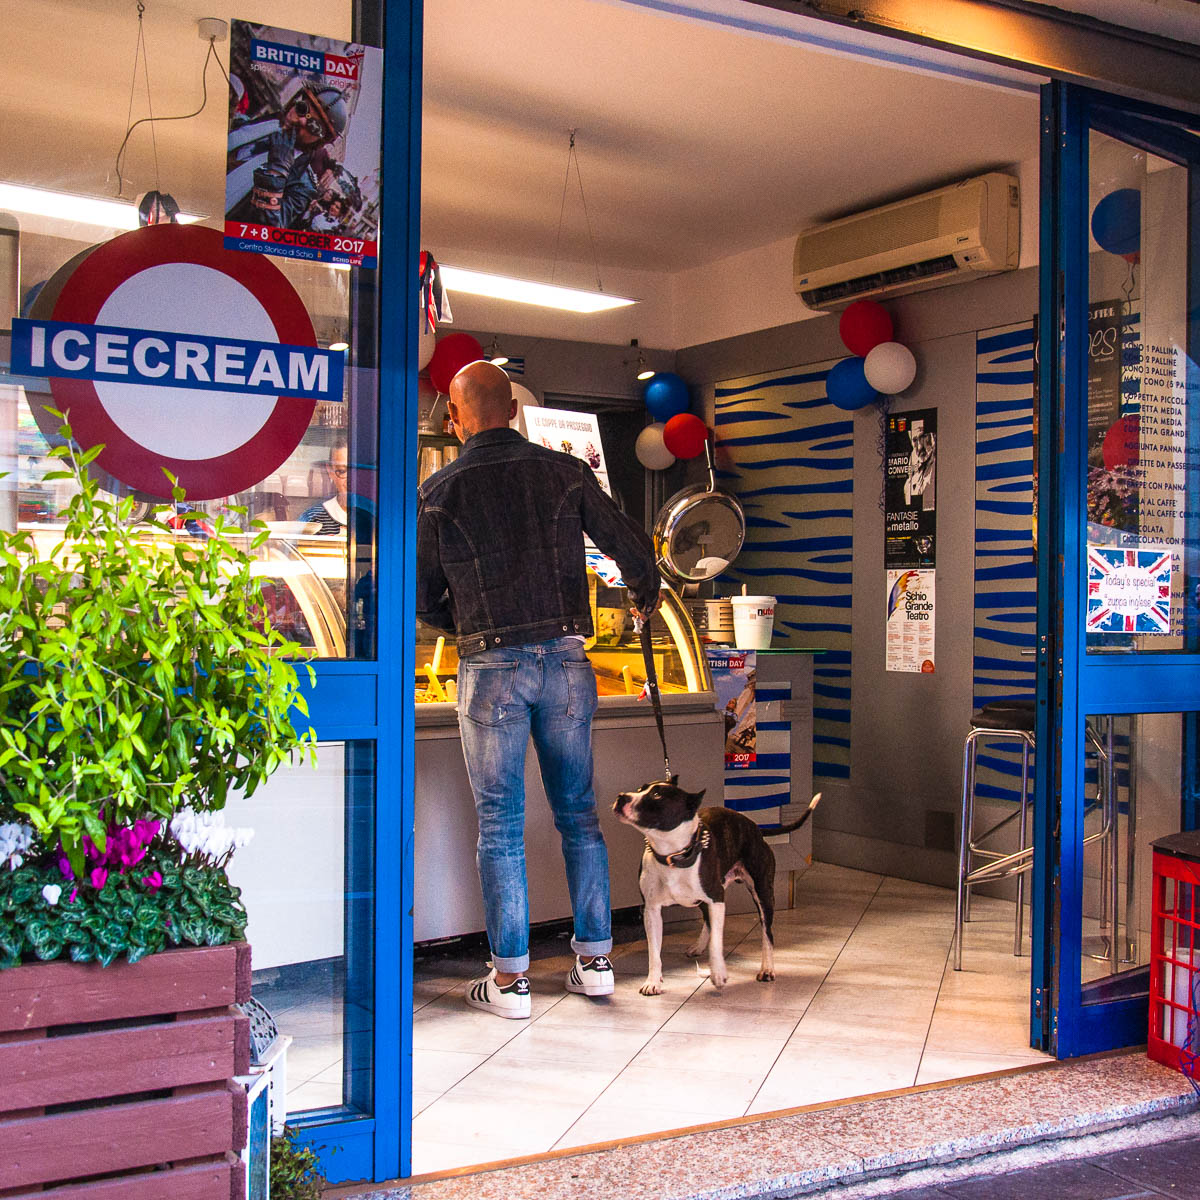 An Italian gelateria dressed up as a British ice-cream shop - British Day Schio - Veneto, Italy - www.rossiwrites.com